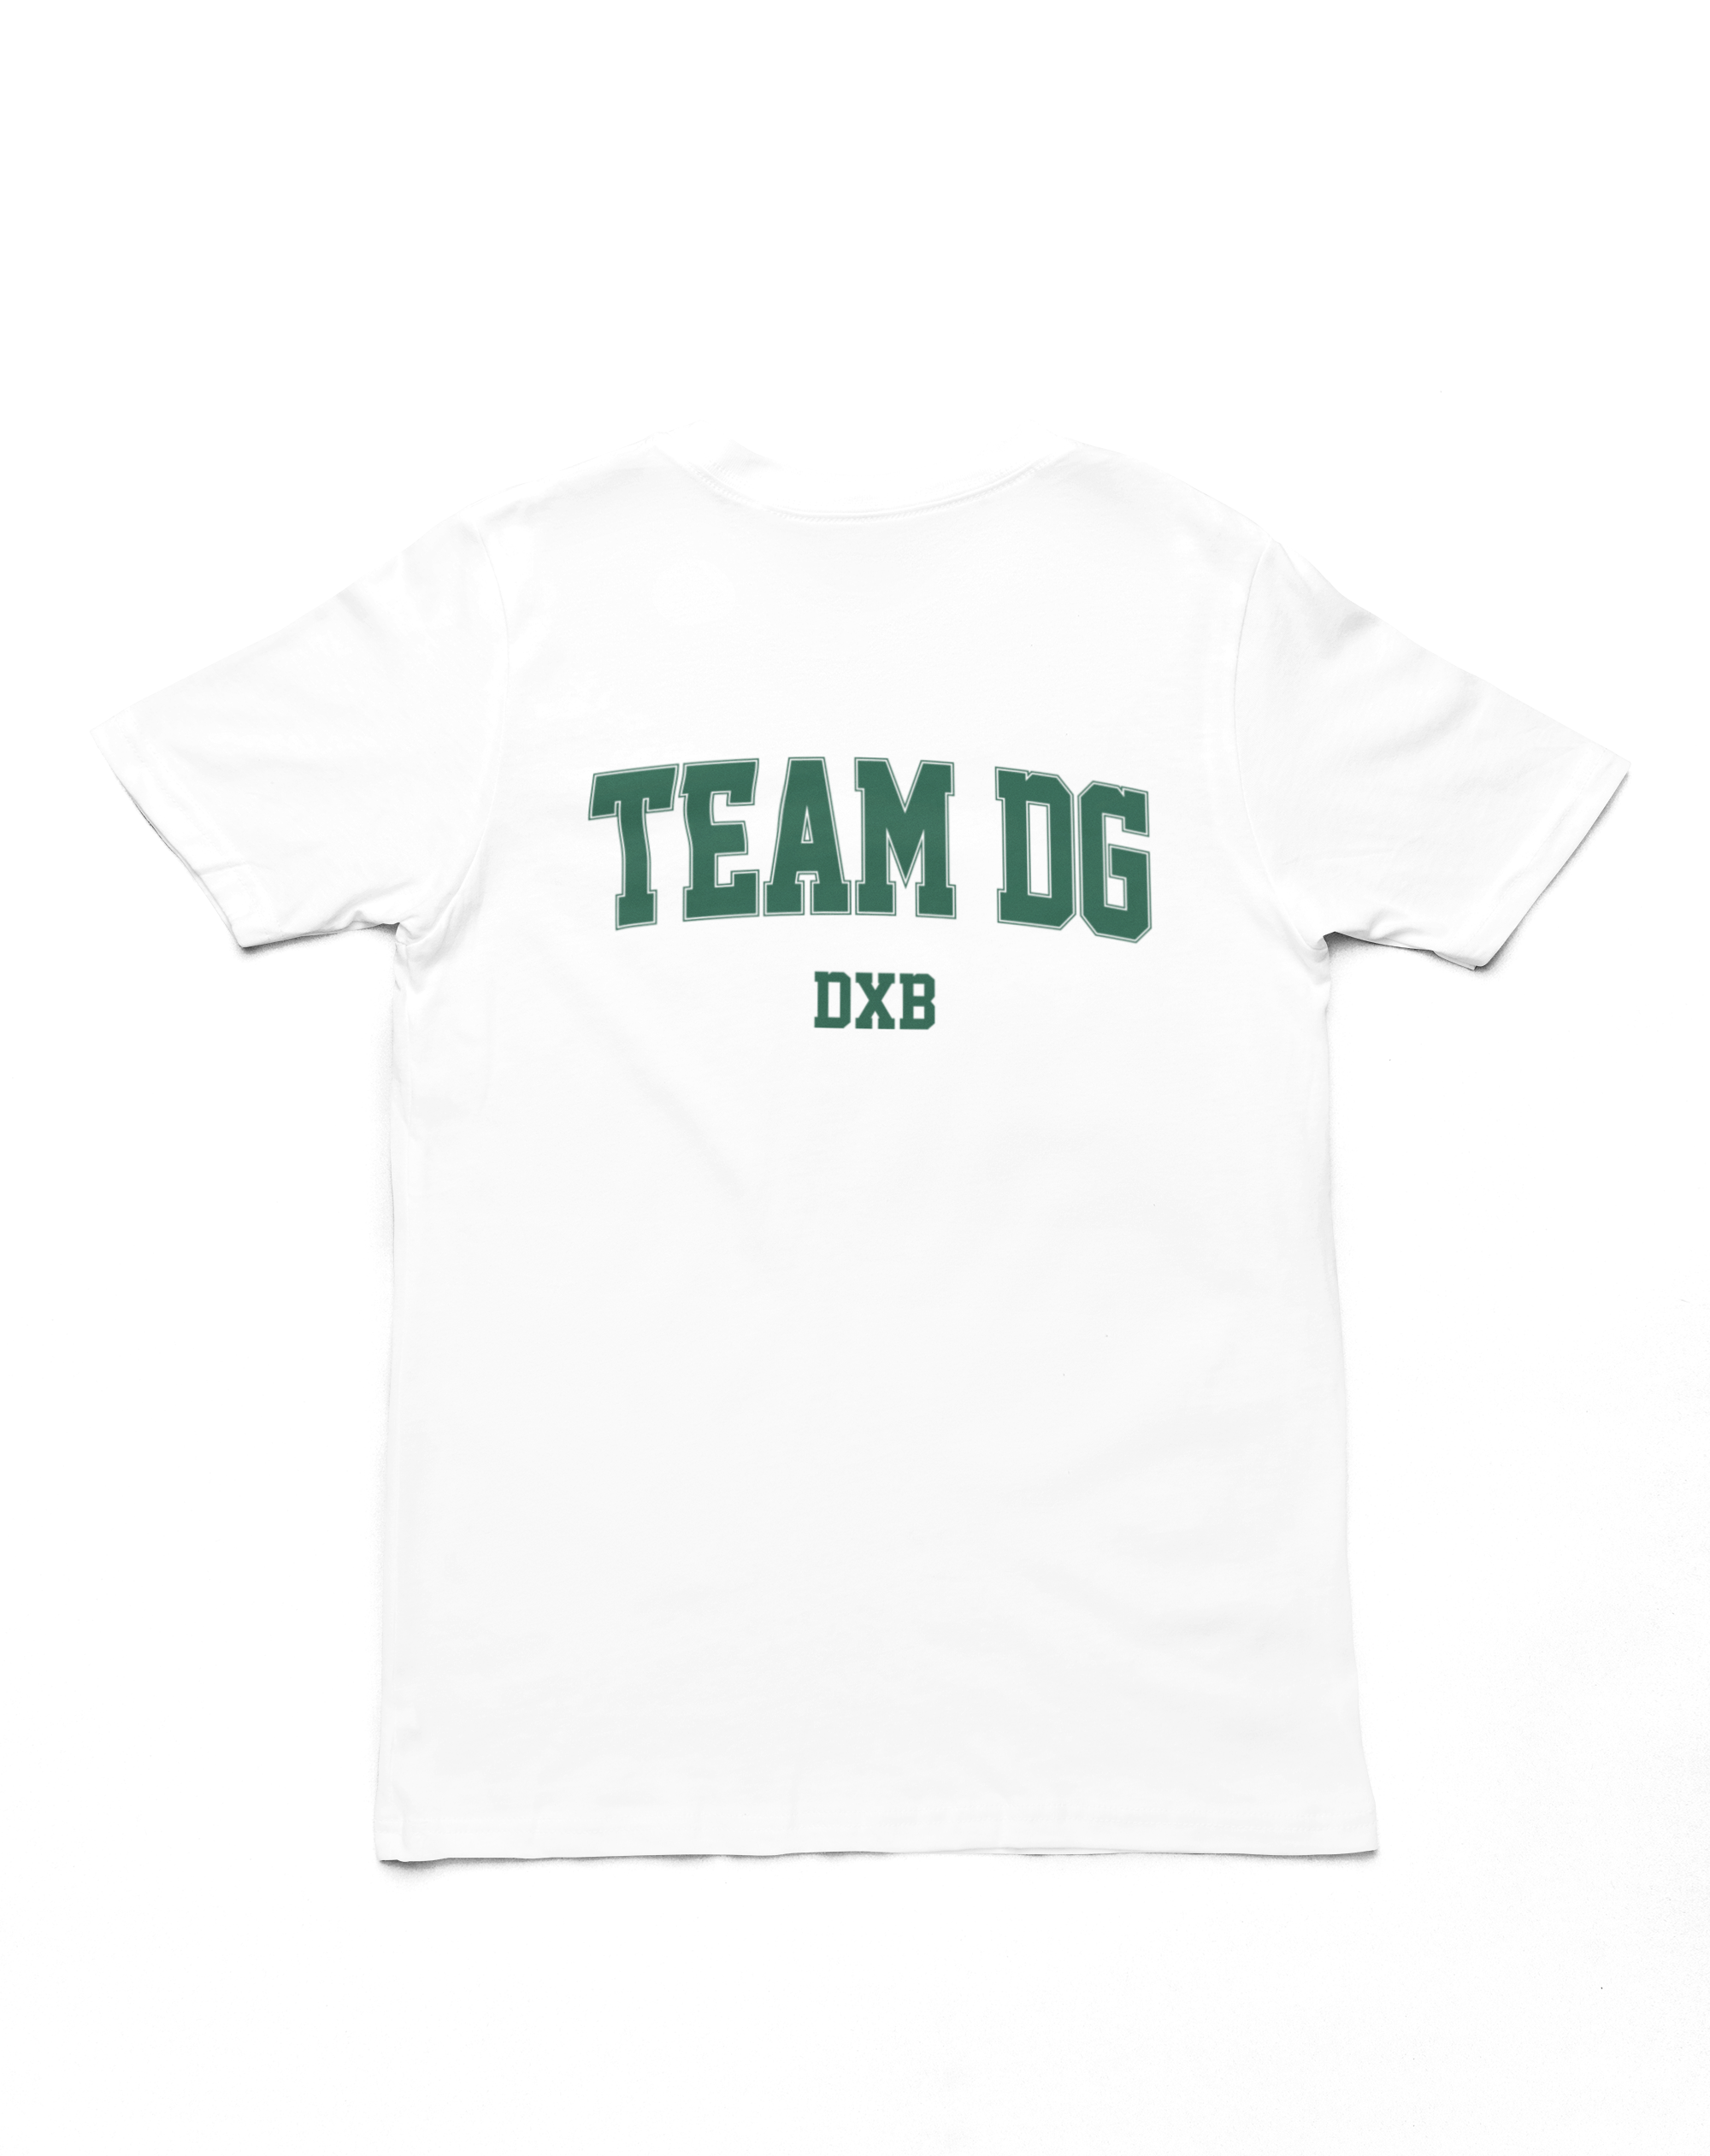 "Team DG DXB" - Shirt Man (Grün)